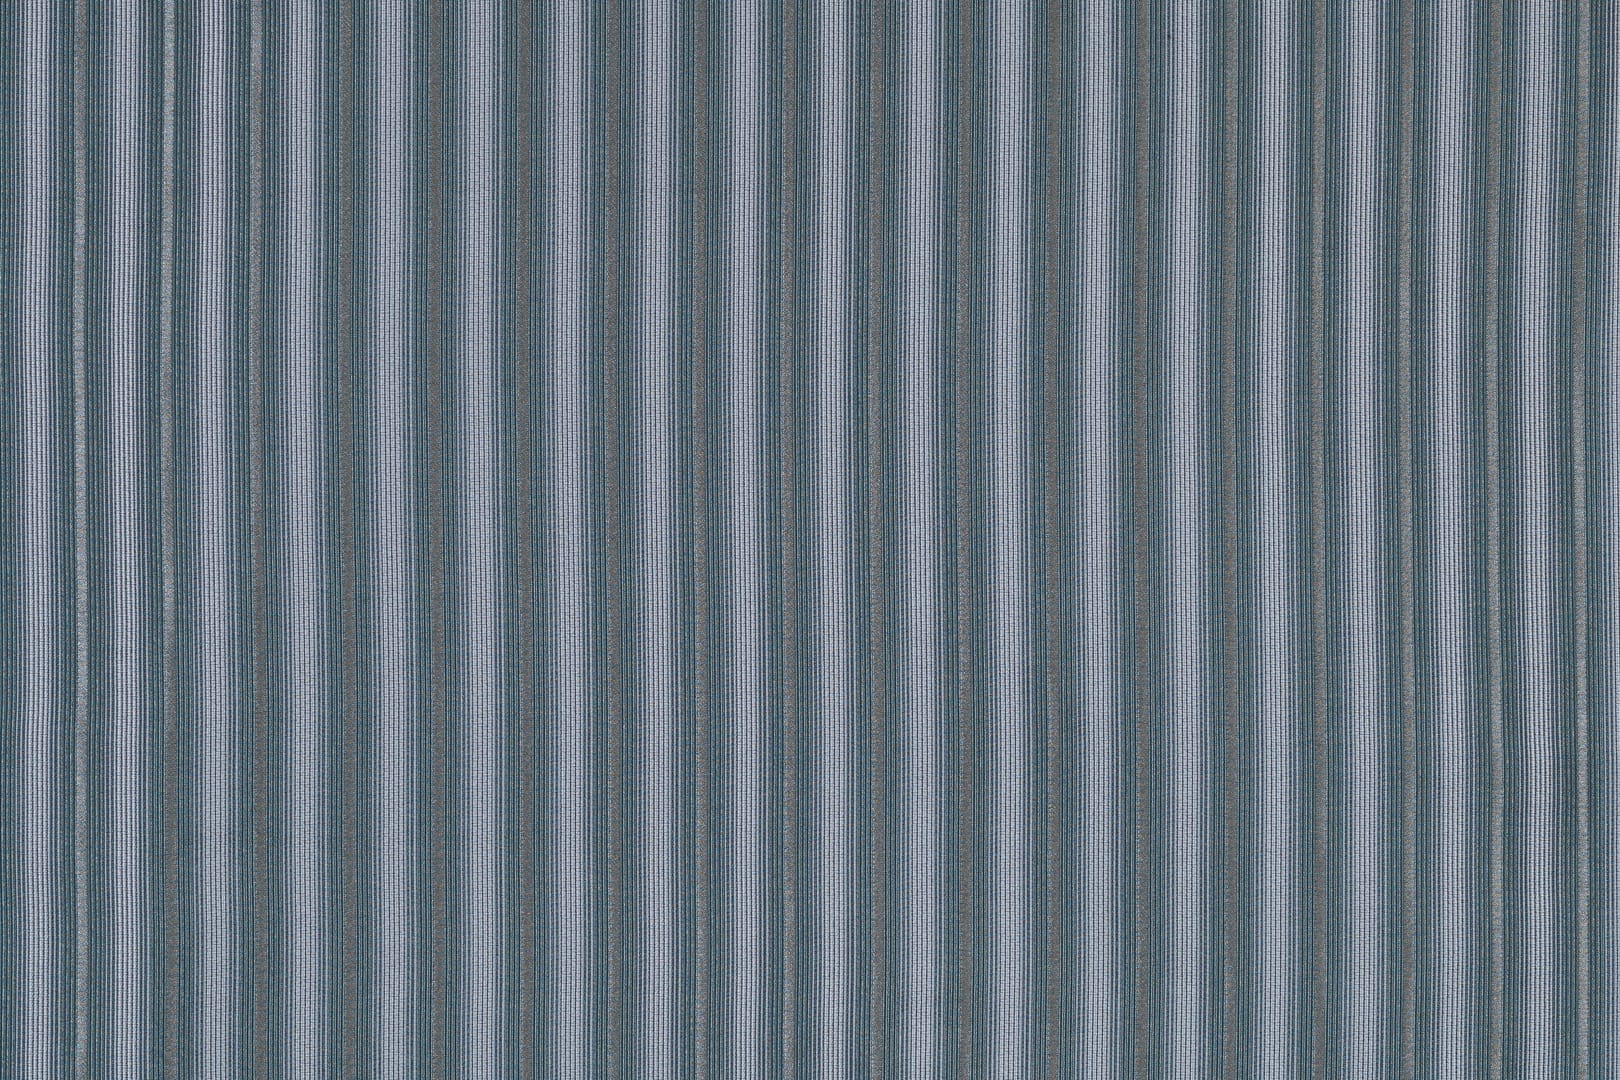 J3157 CAVALIERE 008 Blu home decoration fabric